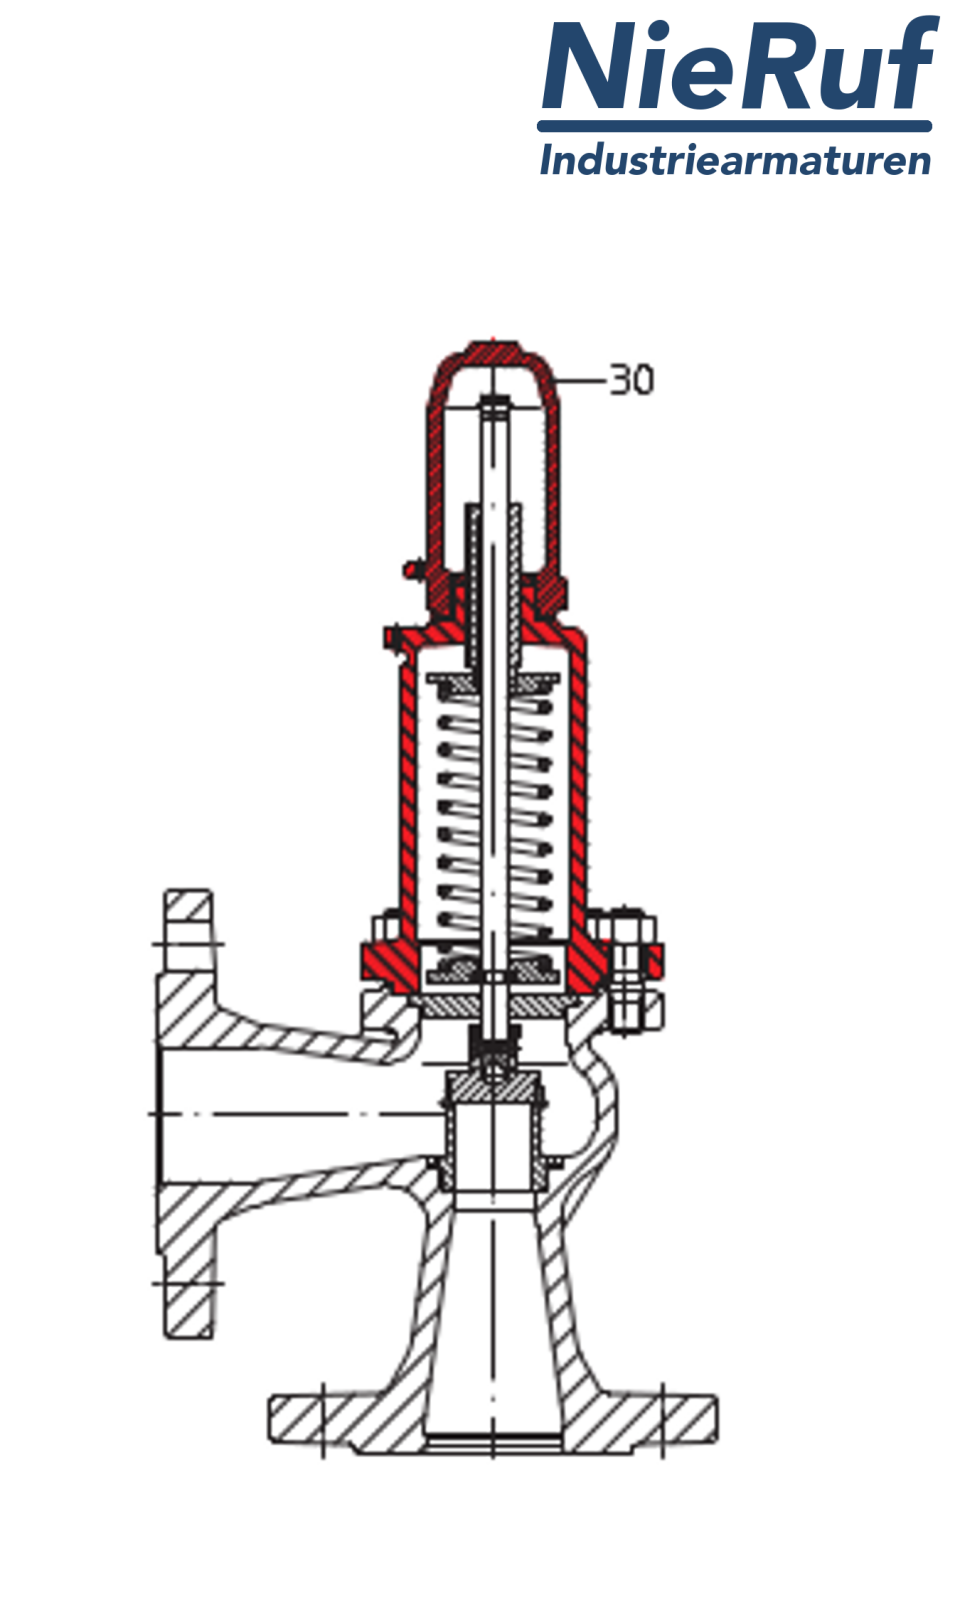 flange-safety valve DN25/DN25 SF0101, cast iron EN-JL1040 EPDM, without lever